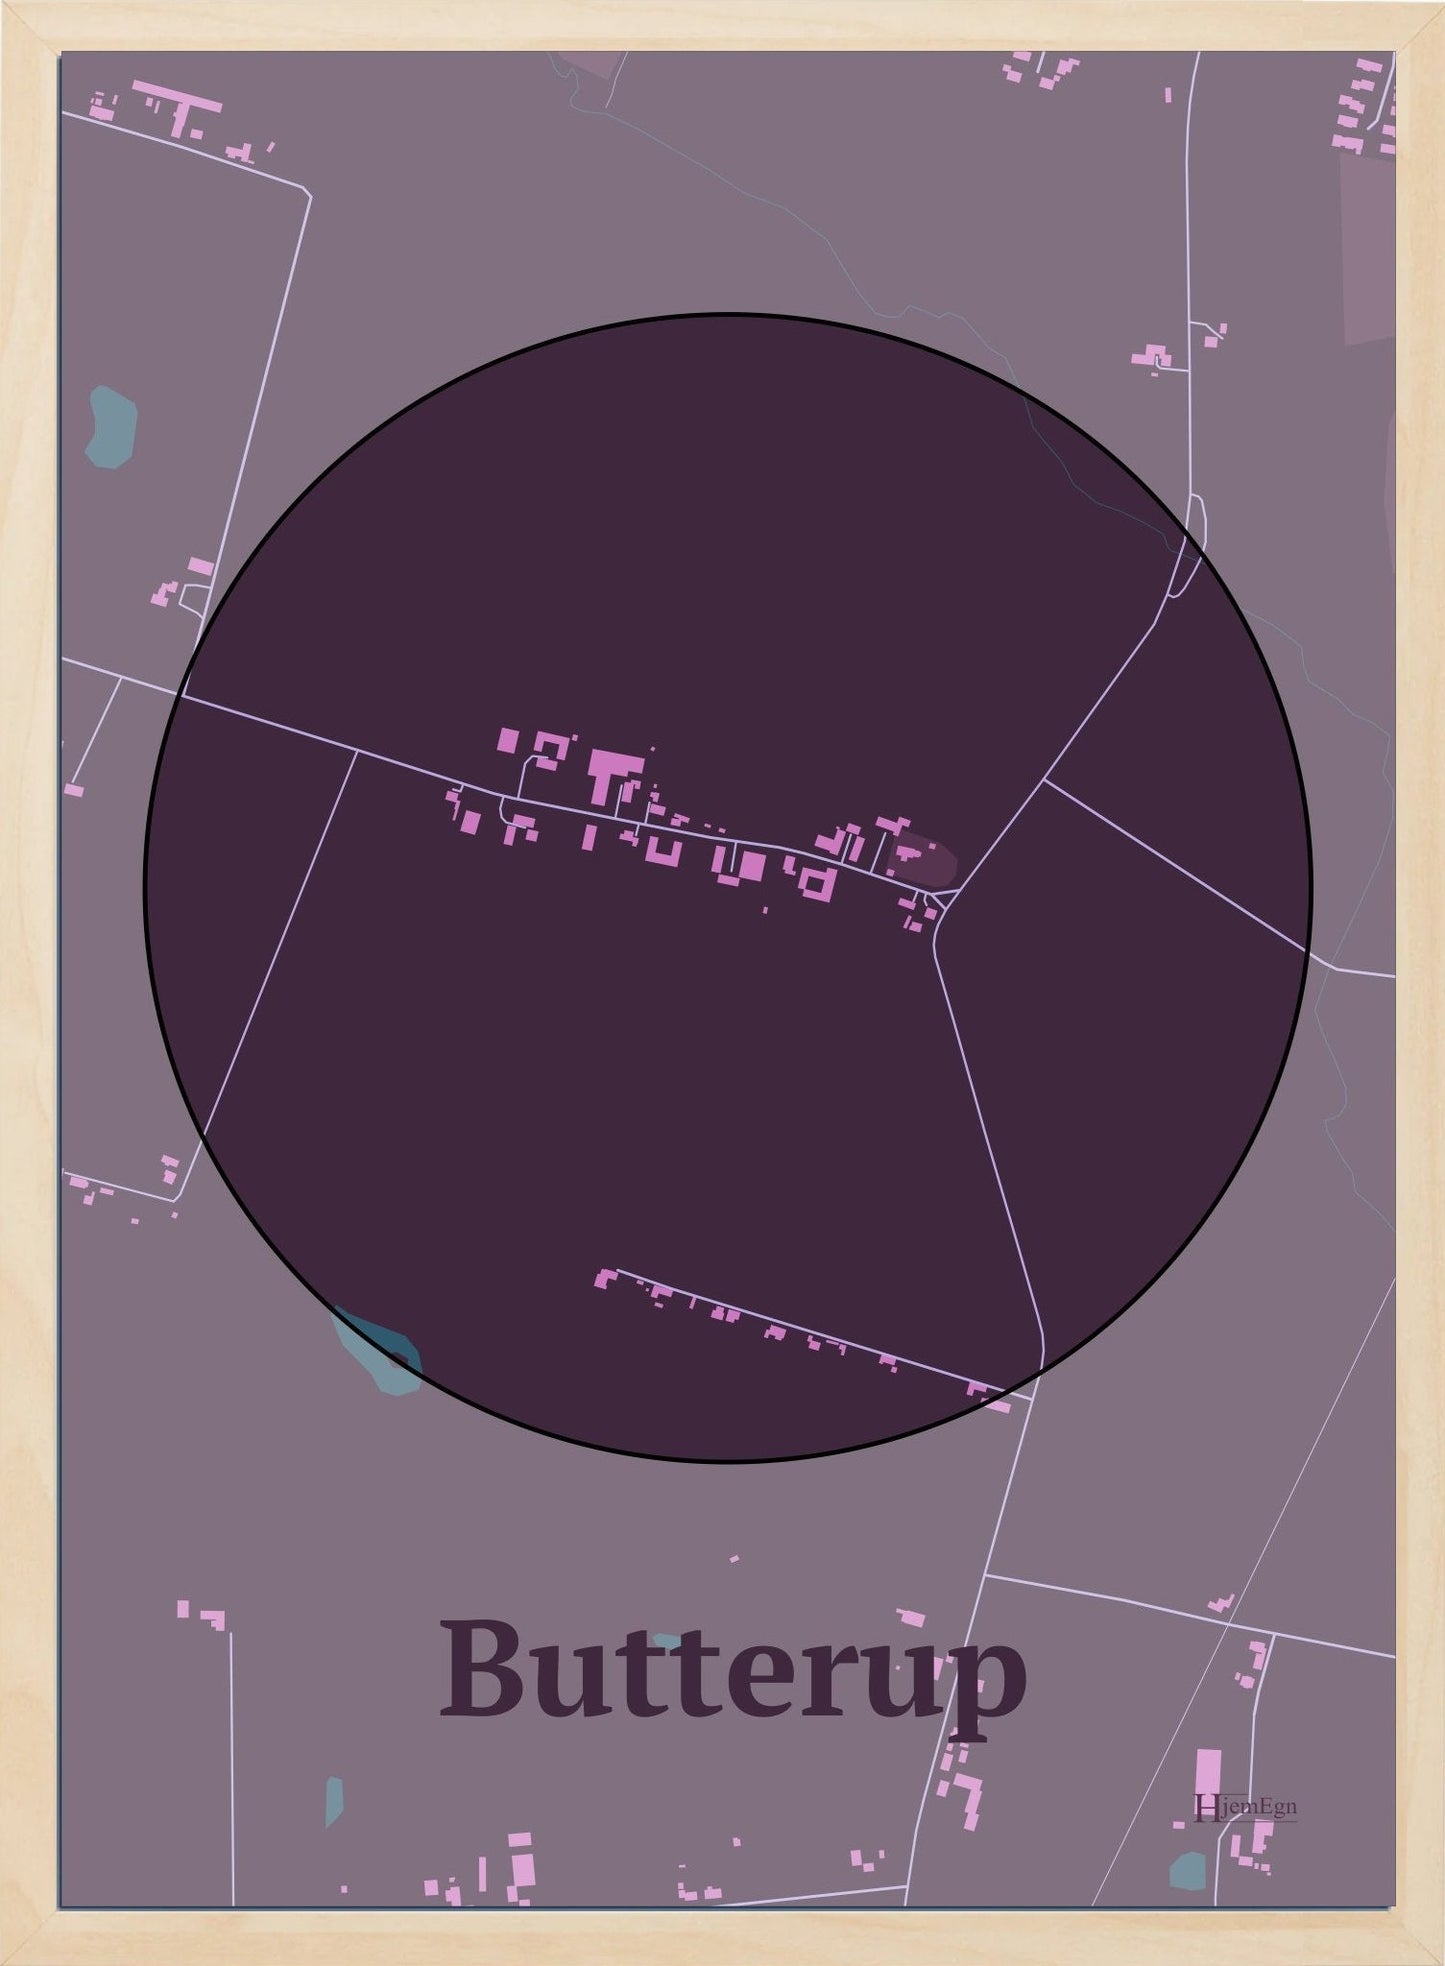 Butterup plakat i farve mørk rød og HjemEgn.dk design centrum. Design bykort for Butterup